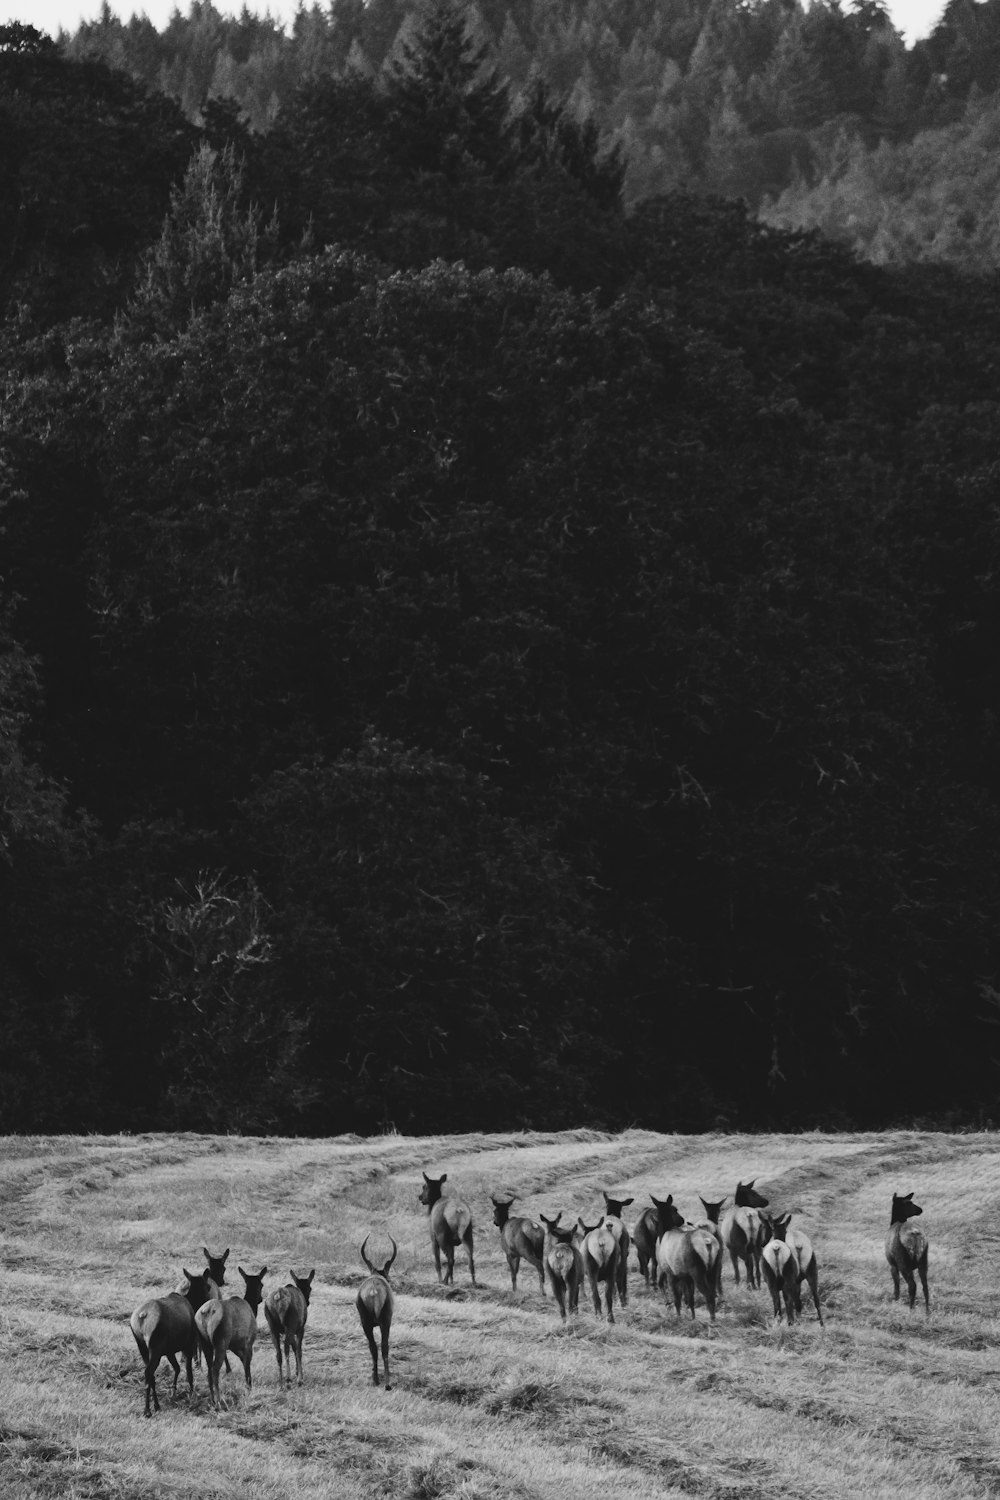 flock of animals walking on grass field near woods